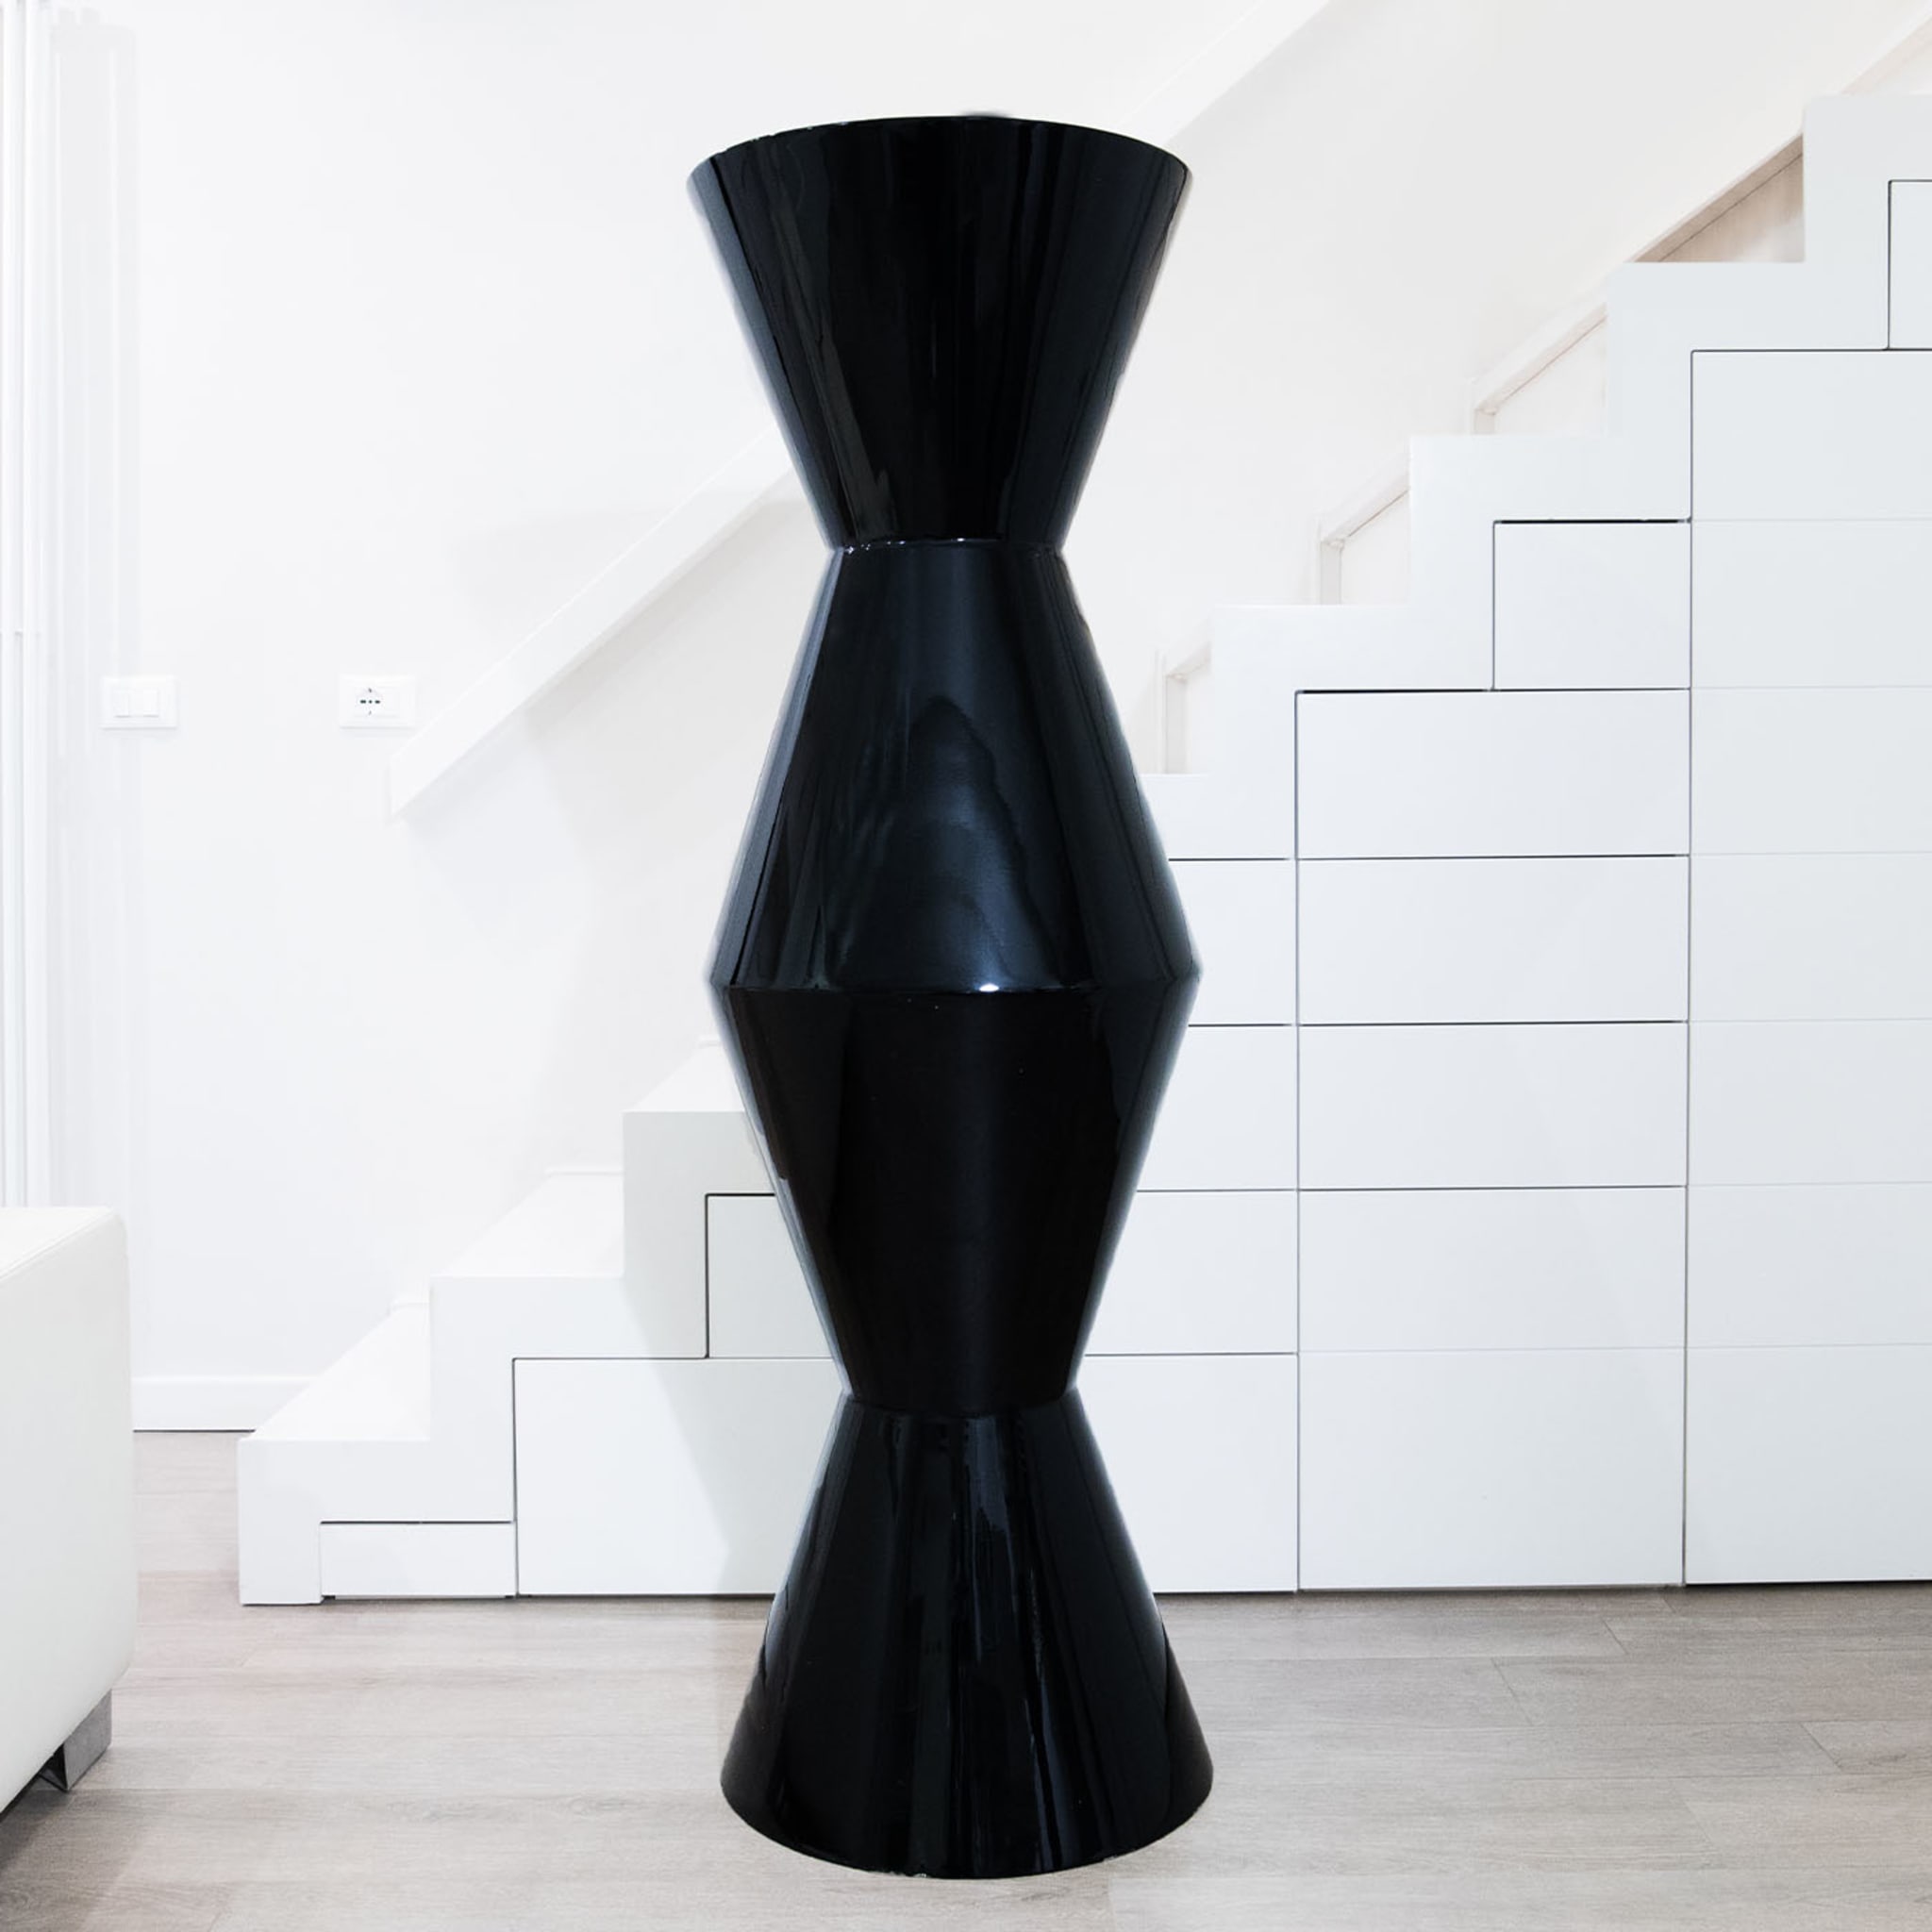 FoRMA Poliedro Black Vase by Simone Micheli - Alternative view 2